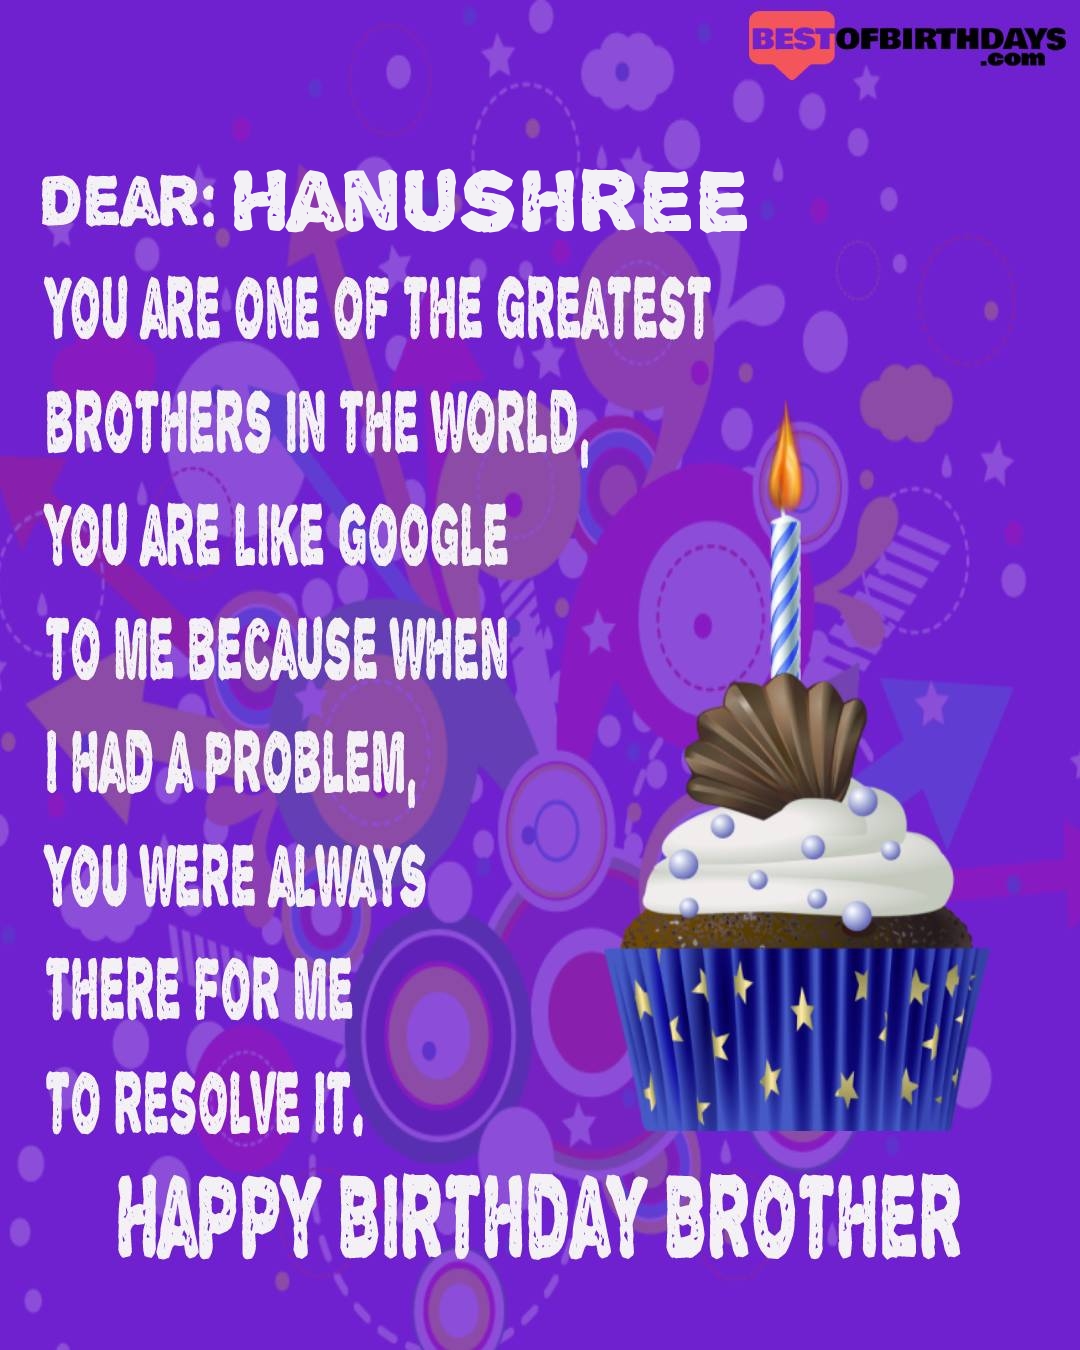 Happy birthday hanushree bhai brother bro